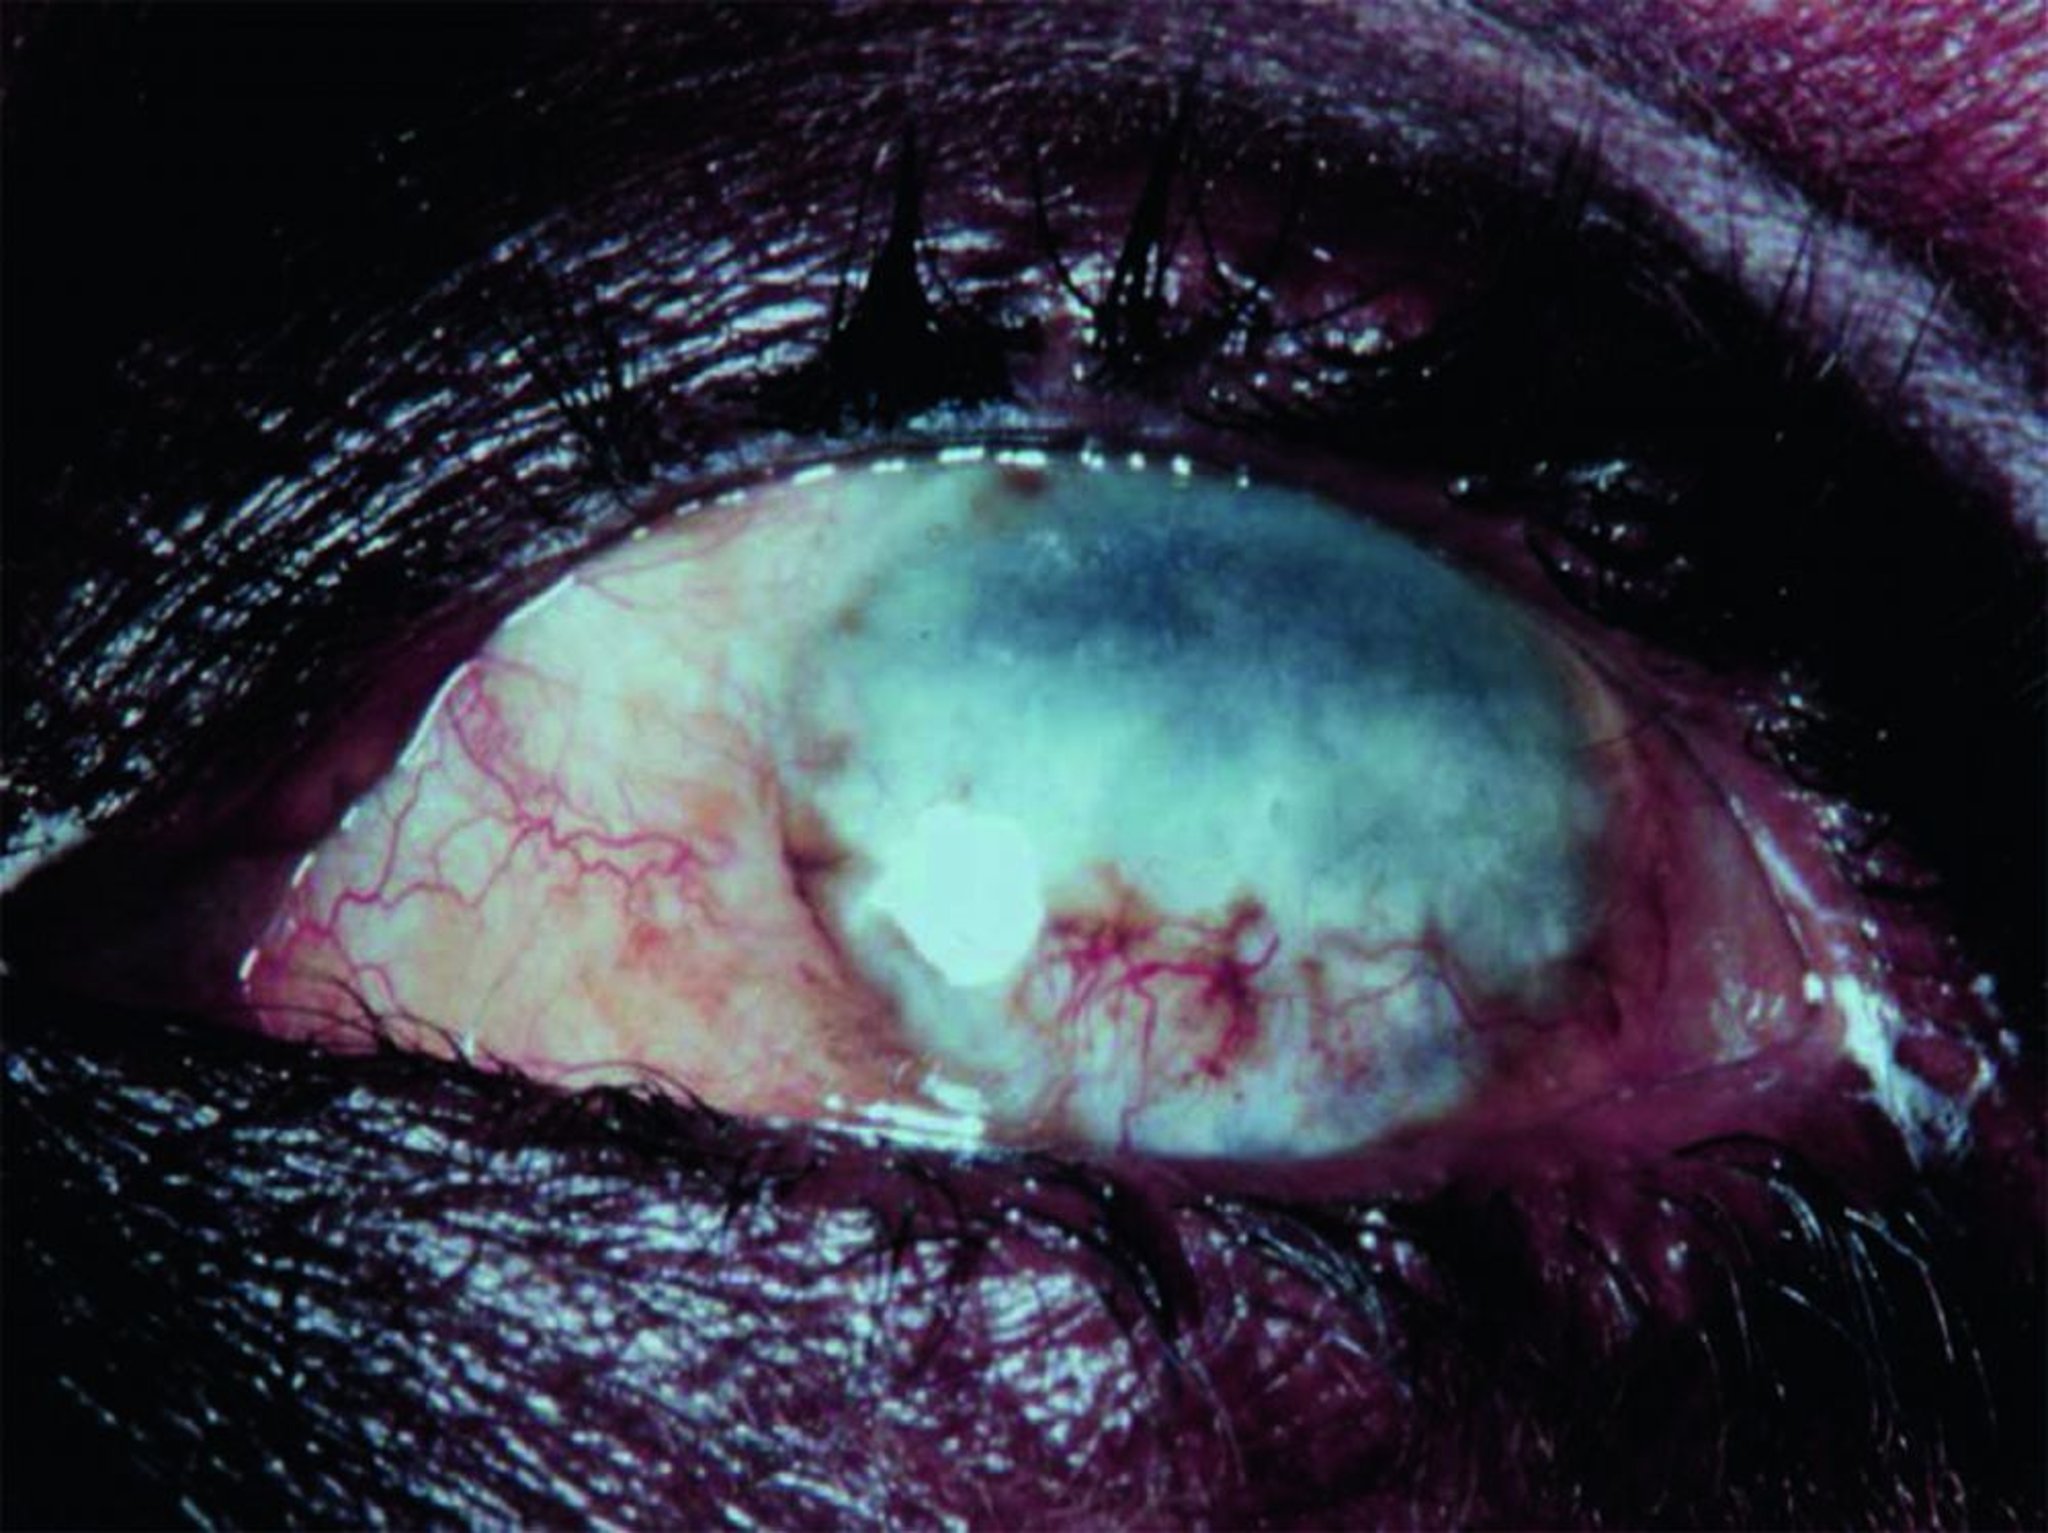 Tissu cicatriciel sur l’œil dû à l’onchocercose